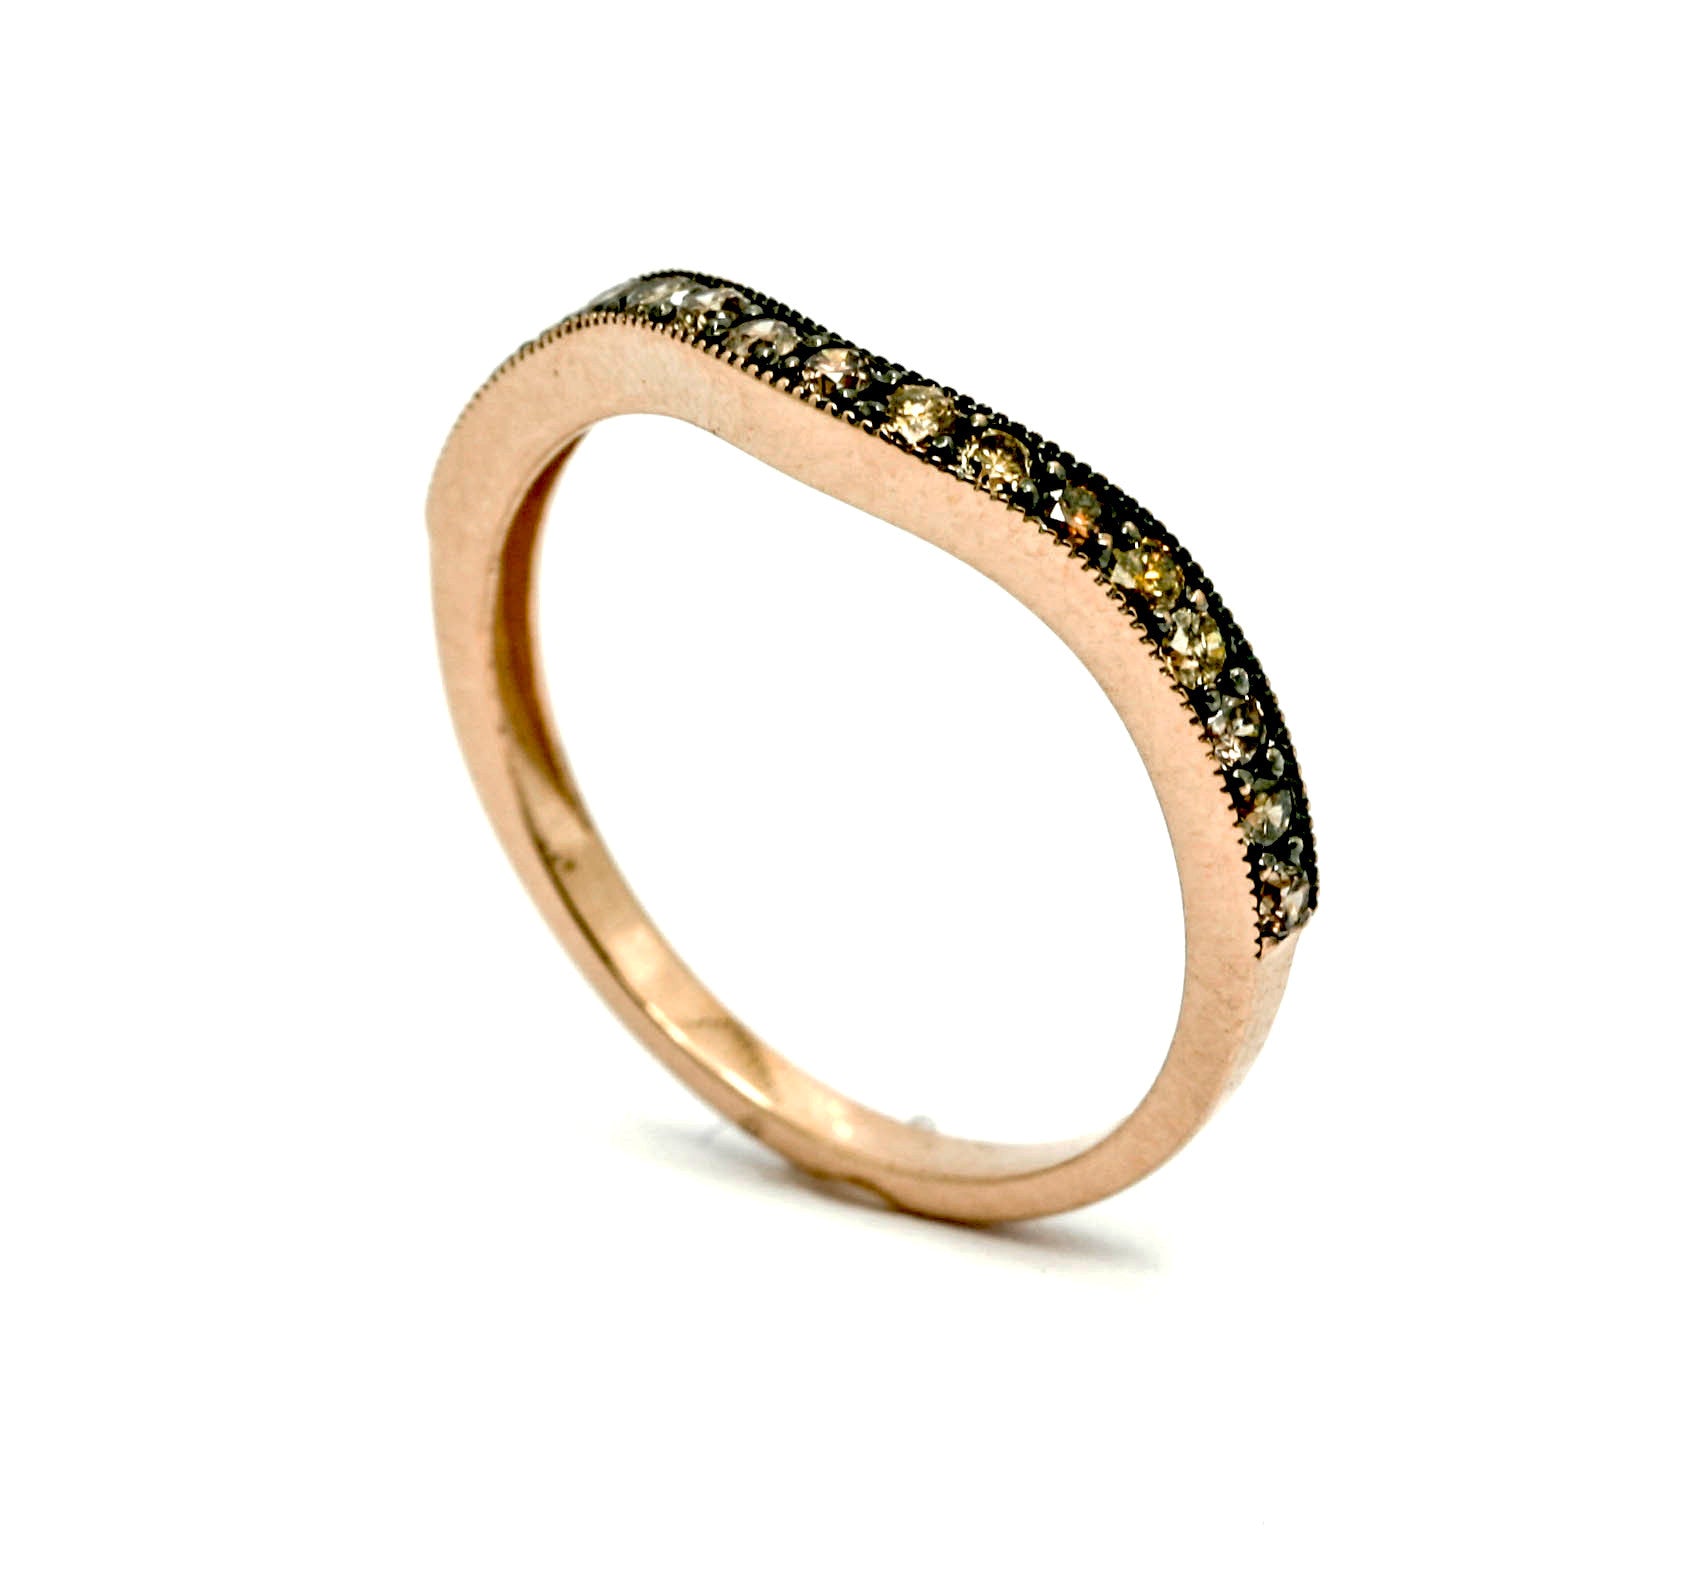 Moissanite Engagement Ring, Unique 1 Carat Floating Halo Rose Gold, White & Fancy Color Brown Diamonds, Forever Brilliant Moissanite. - FB94613